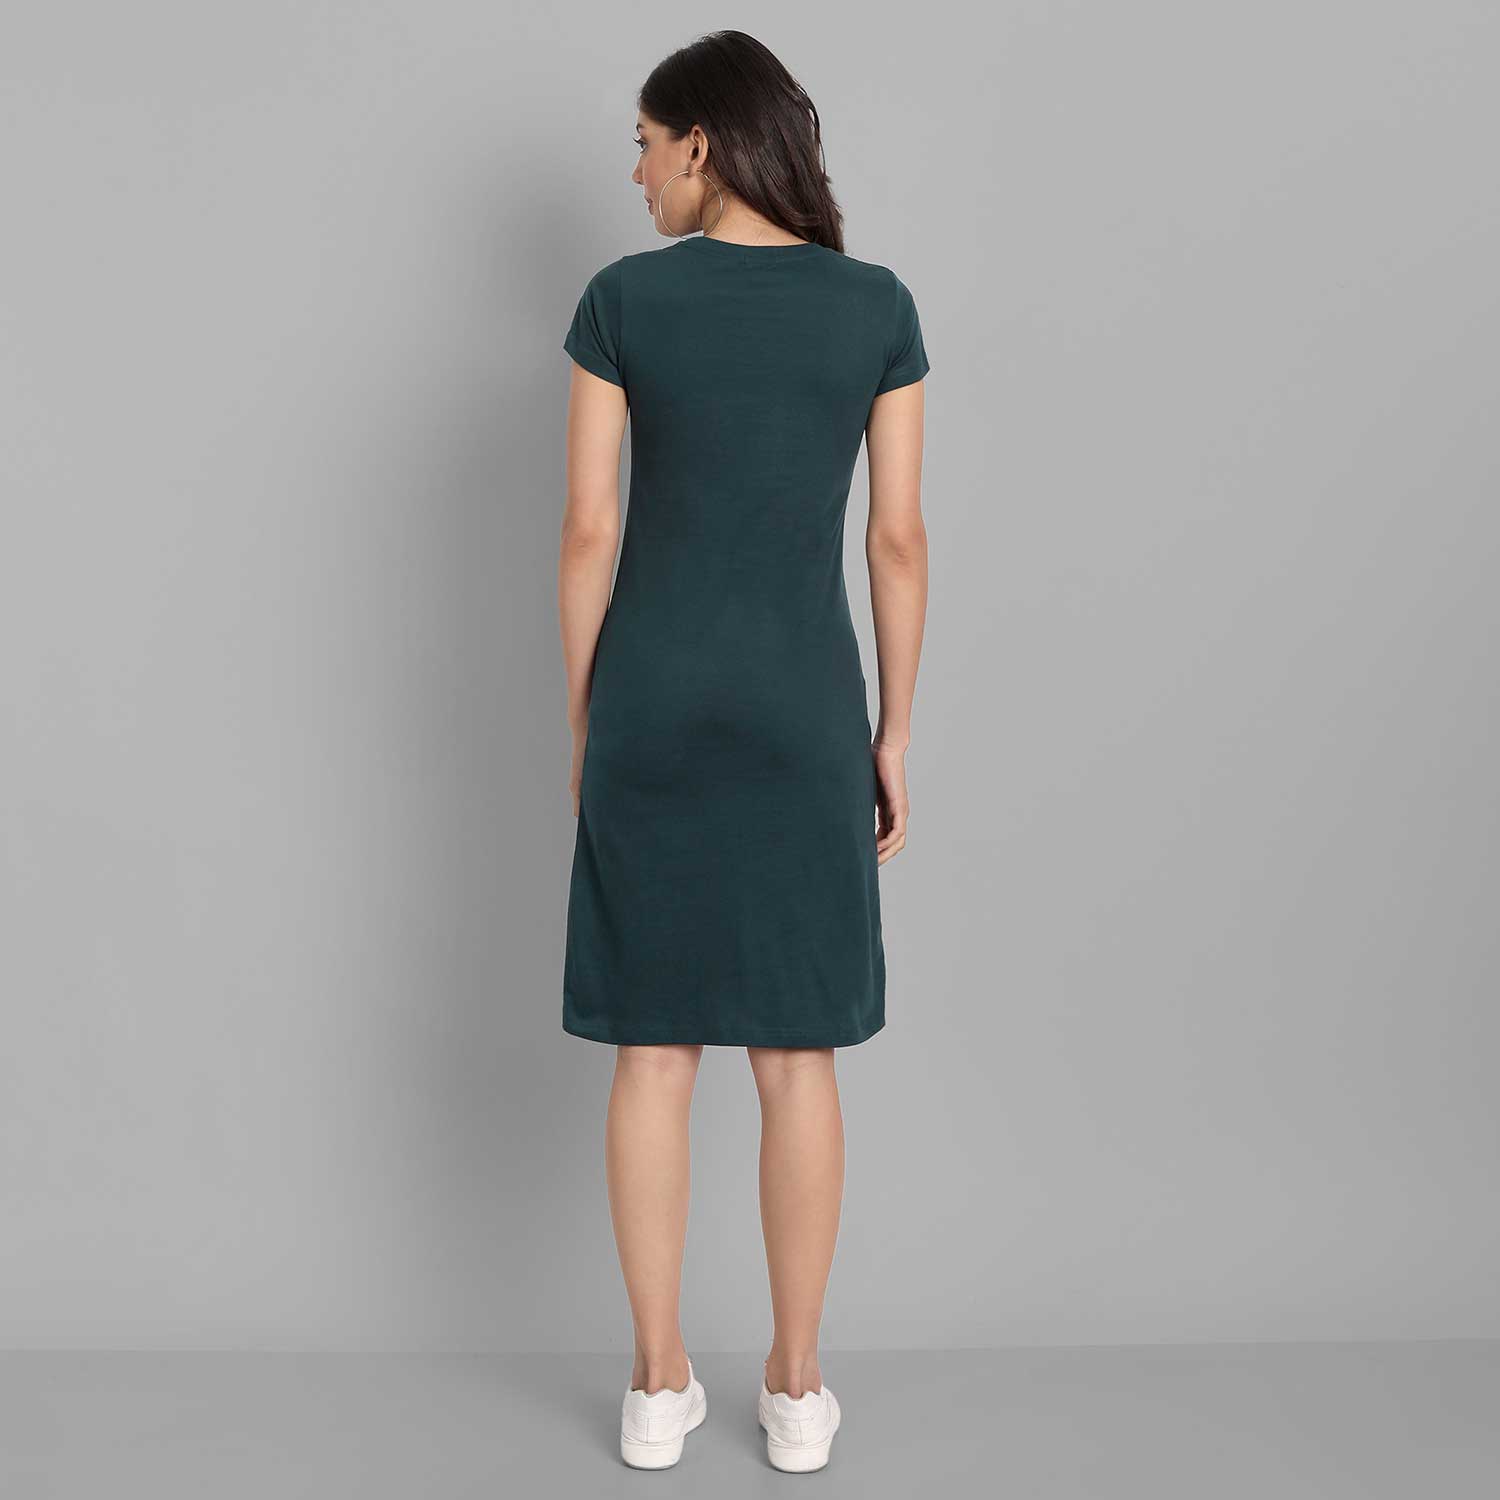 Green Plain Dresses For Woman